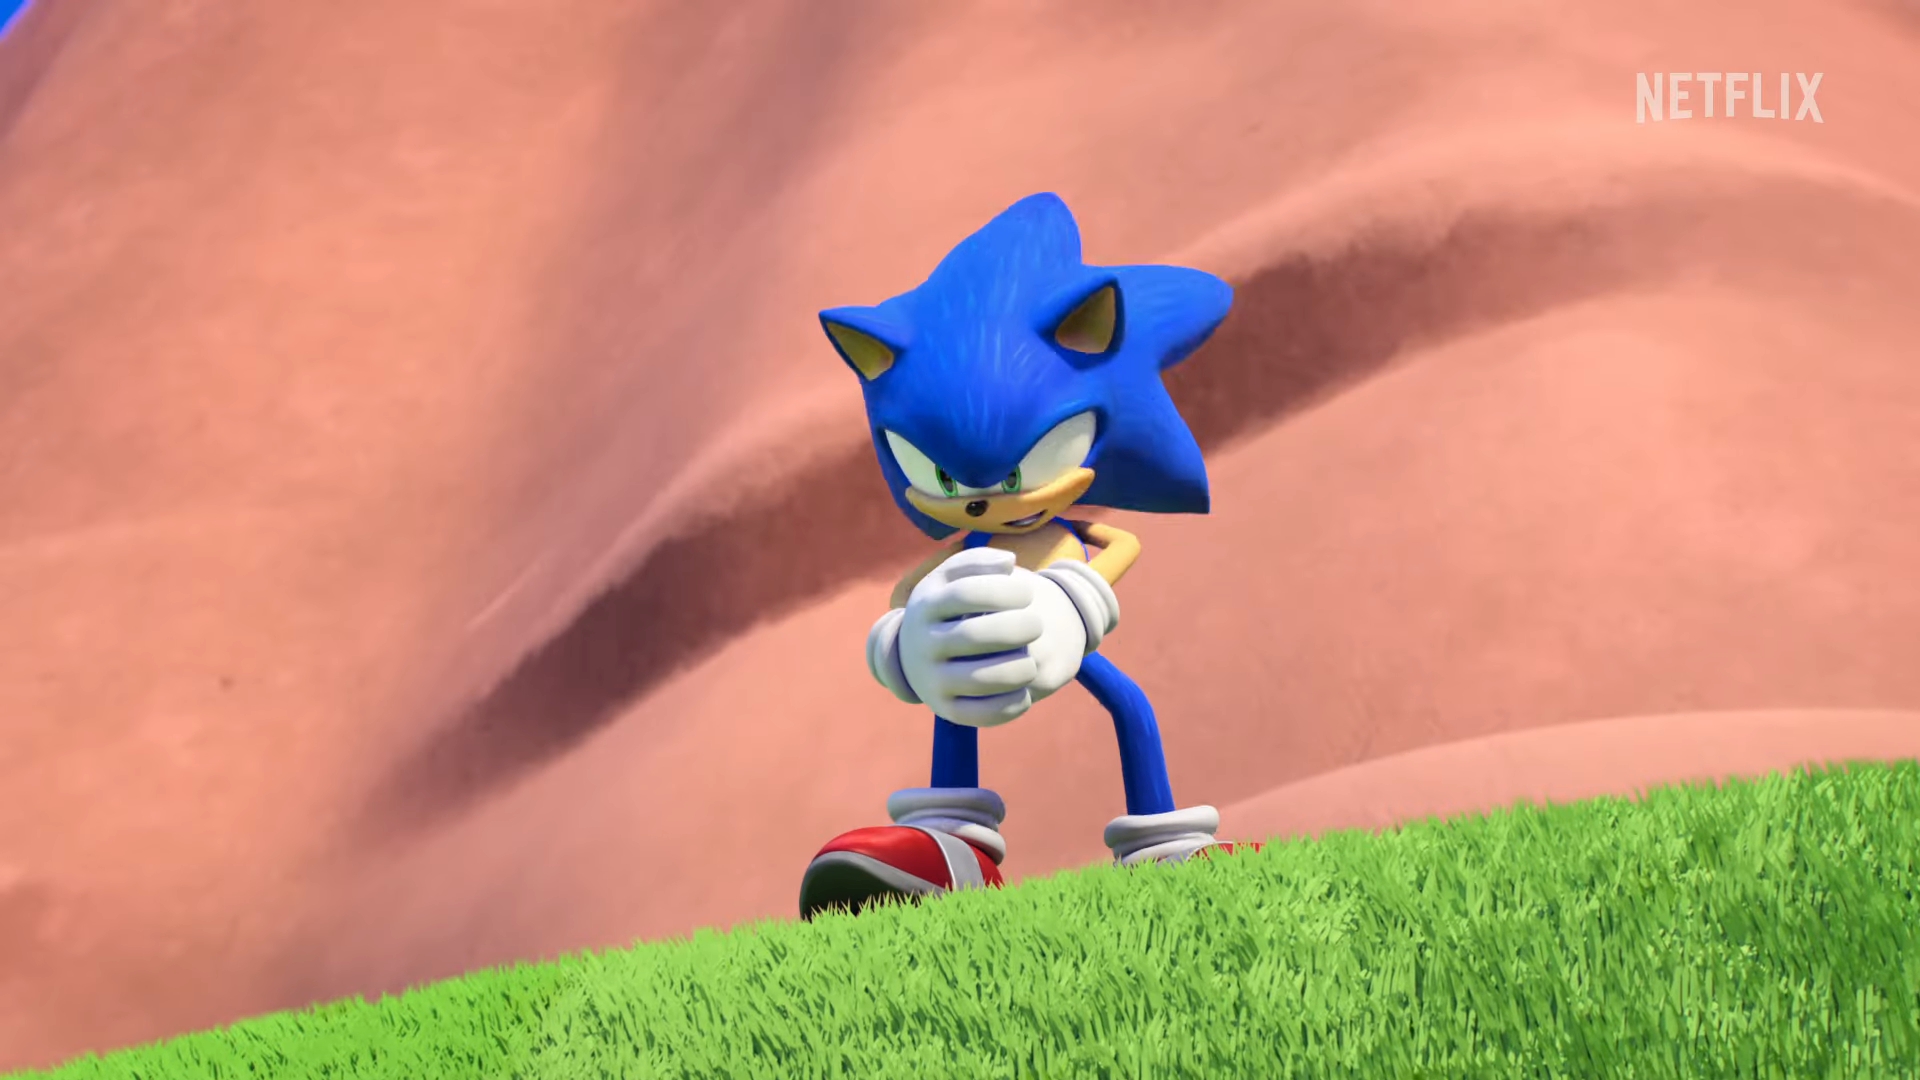 Sonic Says Gotta Go Fast In Latest Sonic Prime Trailer